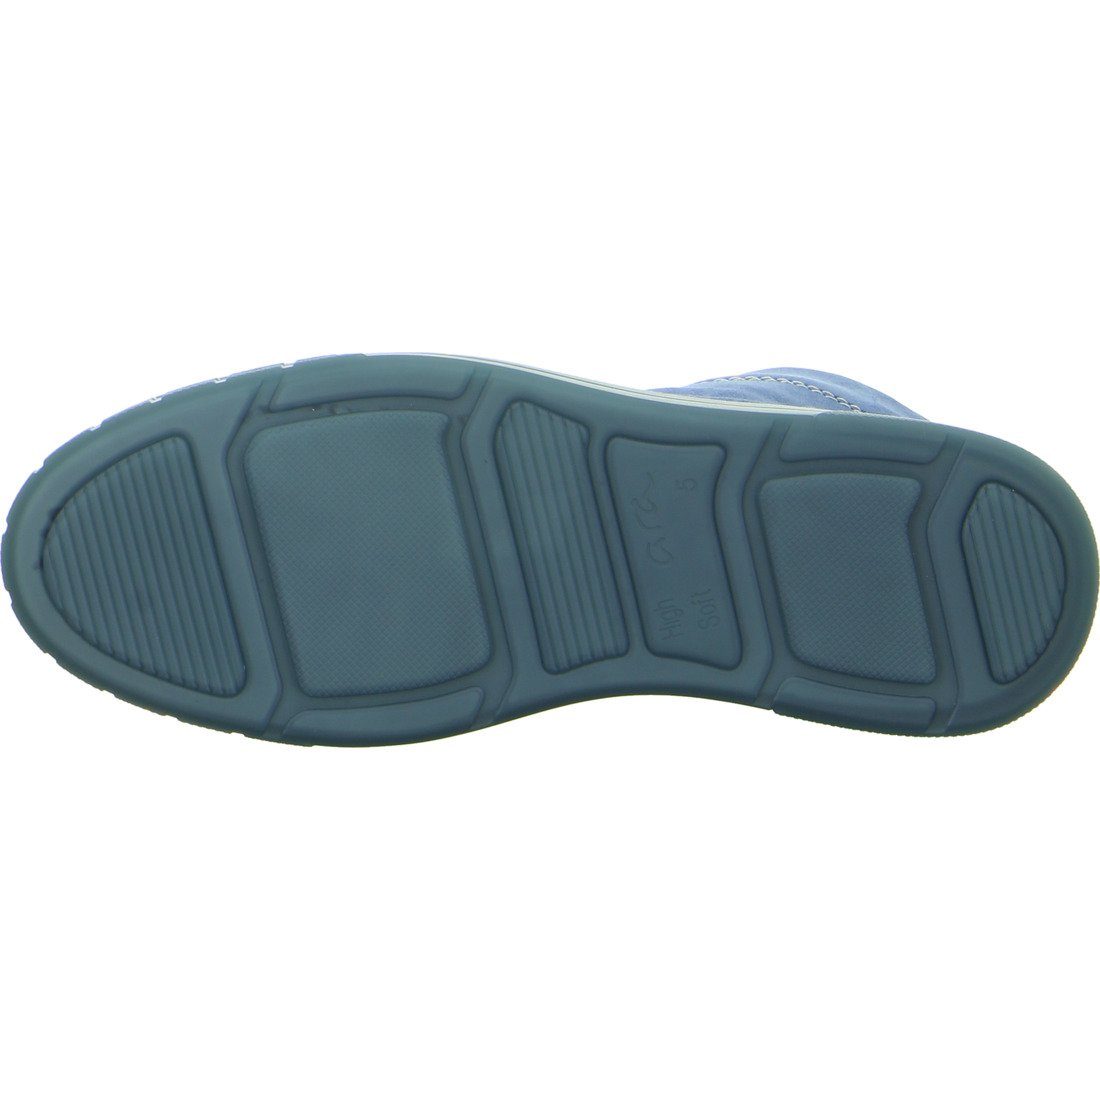 Schuhe, Frisco Ara - 043830 Stiefelette grau Glattleder Ara Stiefelette